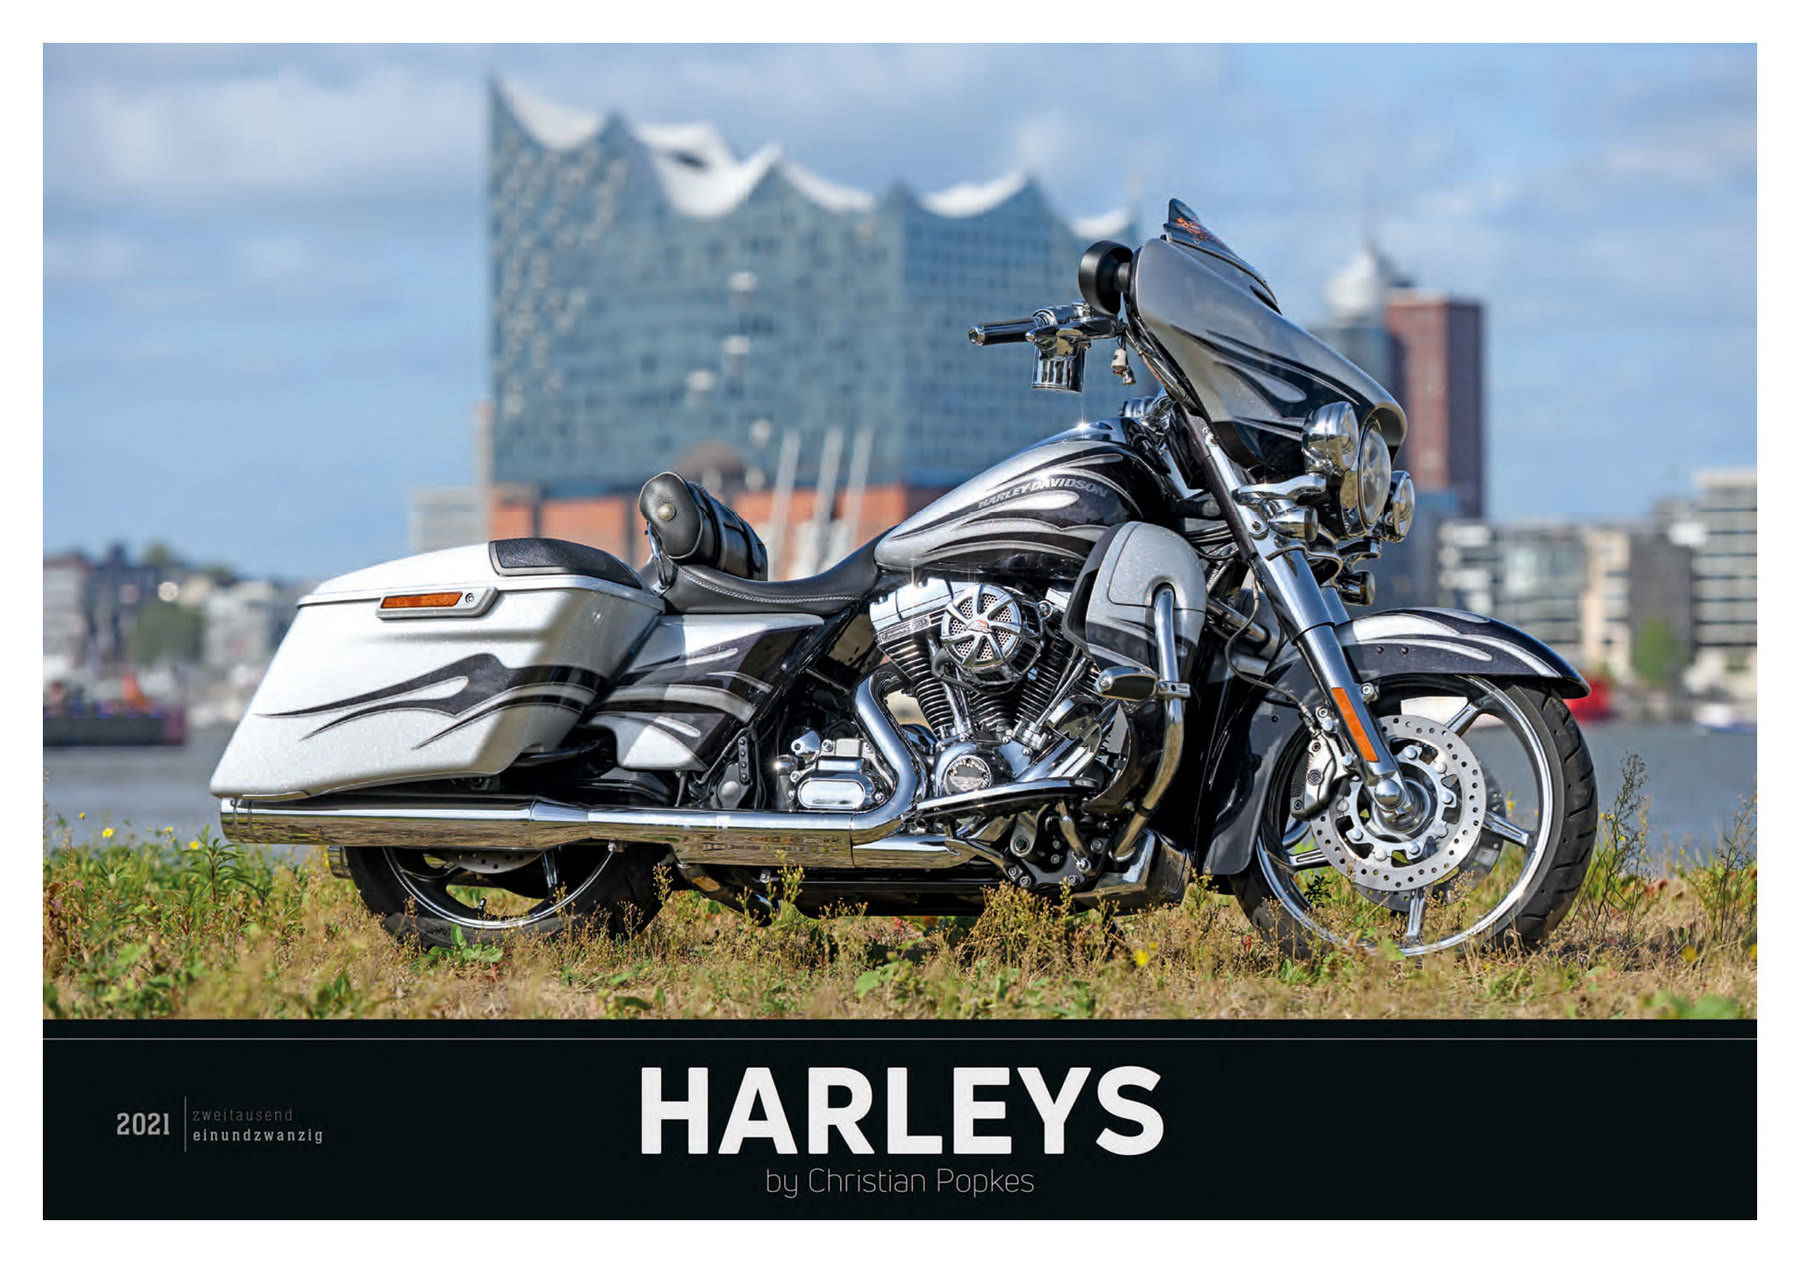 harley davidson 2021 calendar Buy Harley Davidson Calendar 2021 495 X 340 Mm Louis Motorcycle Clothing And Technology harley davidson 2021 calendar